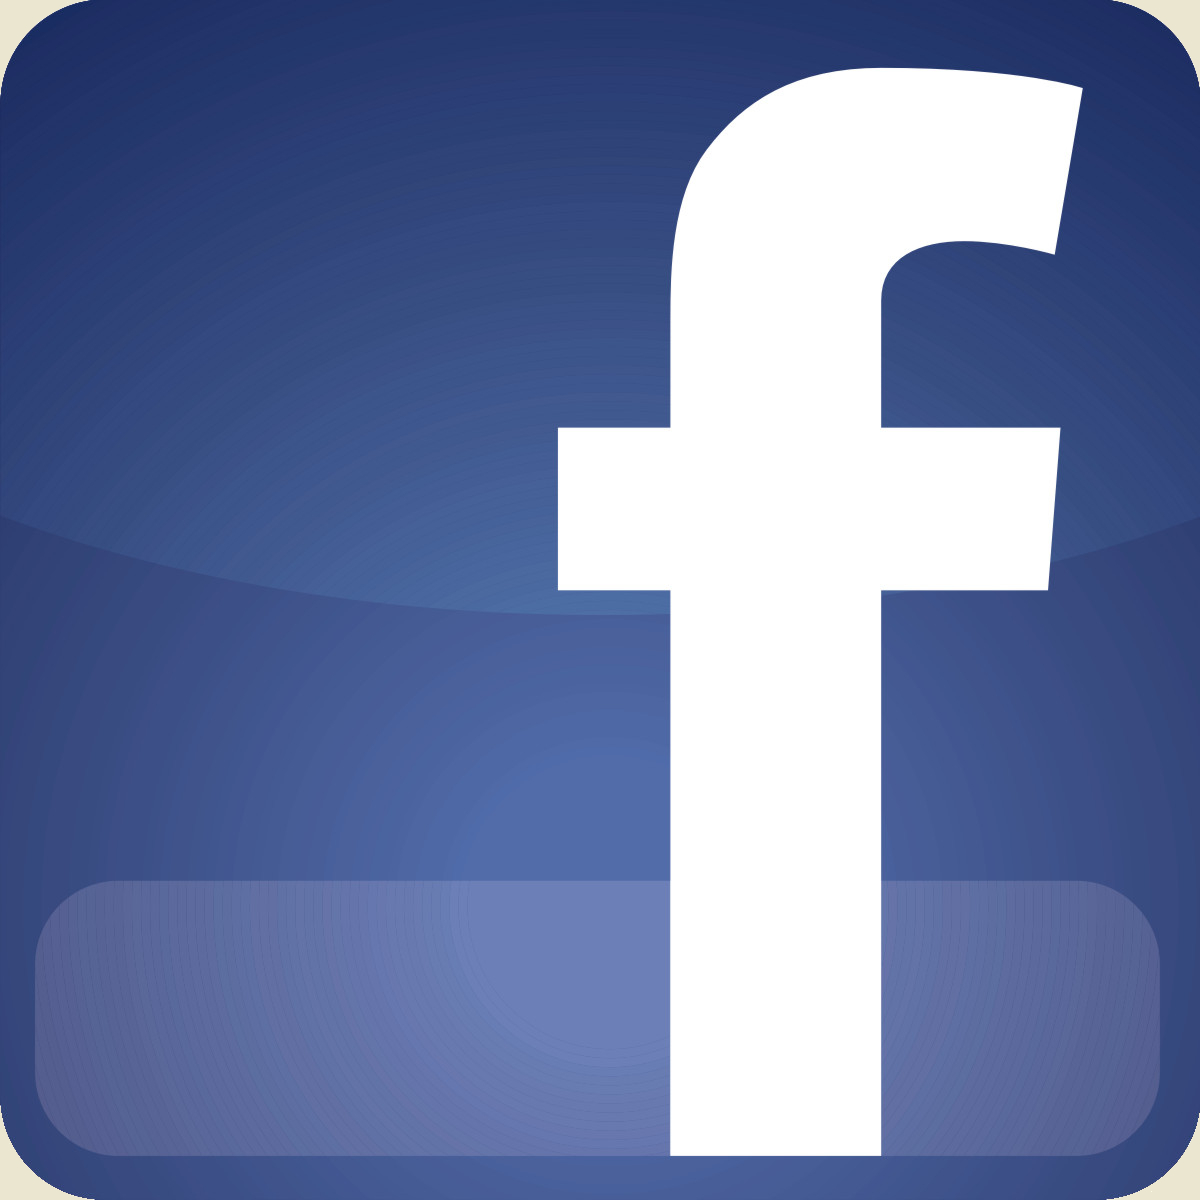 create a facebook account | Sign in Facebook